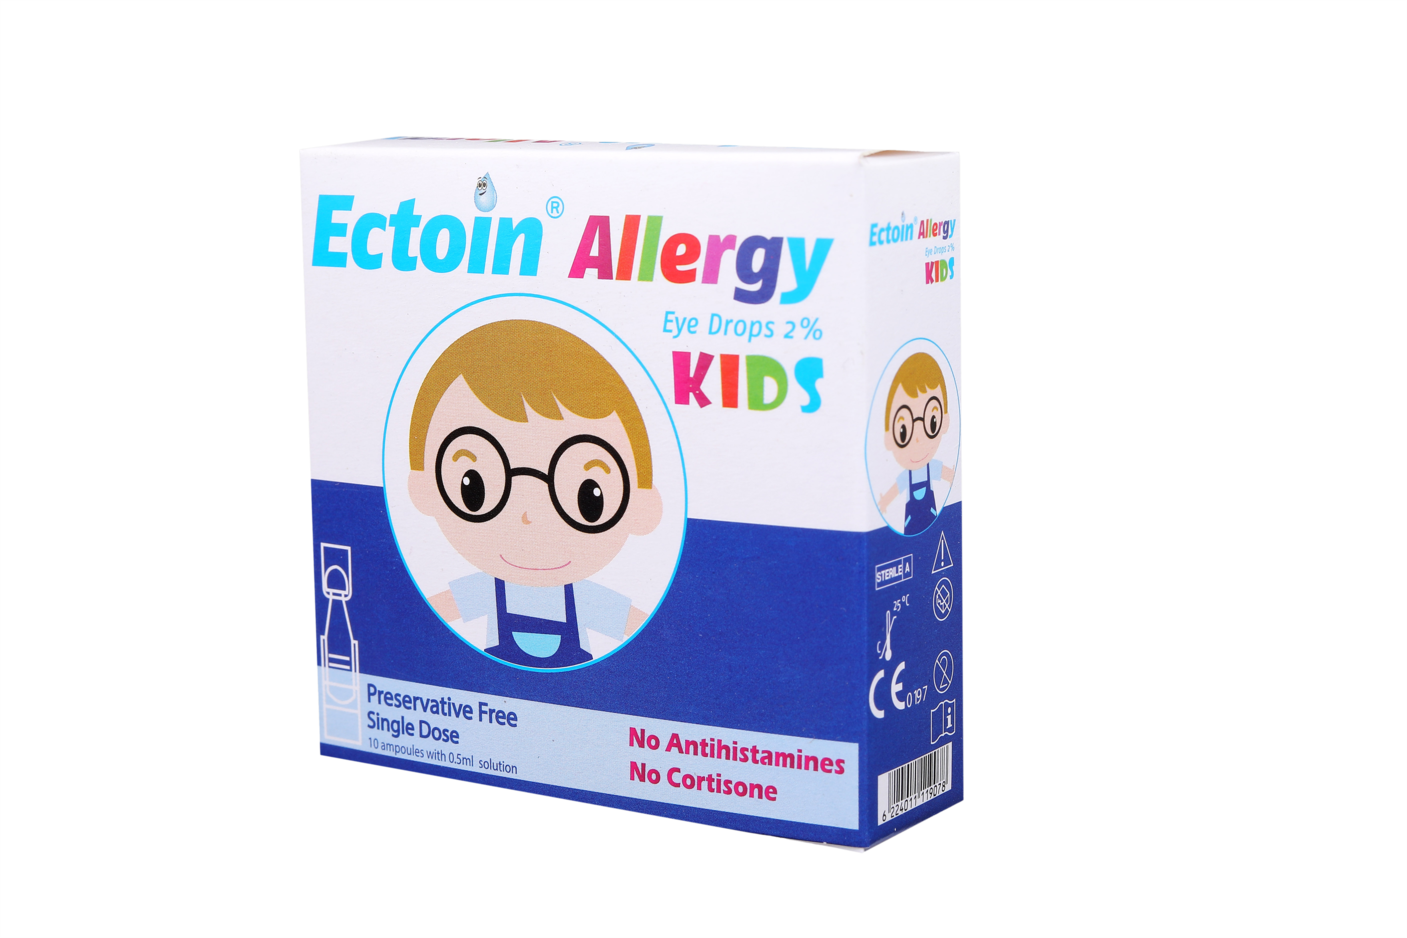 Ectoin Allergy Kids Eye Drops